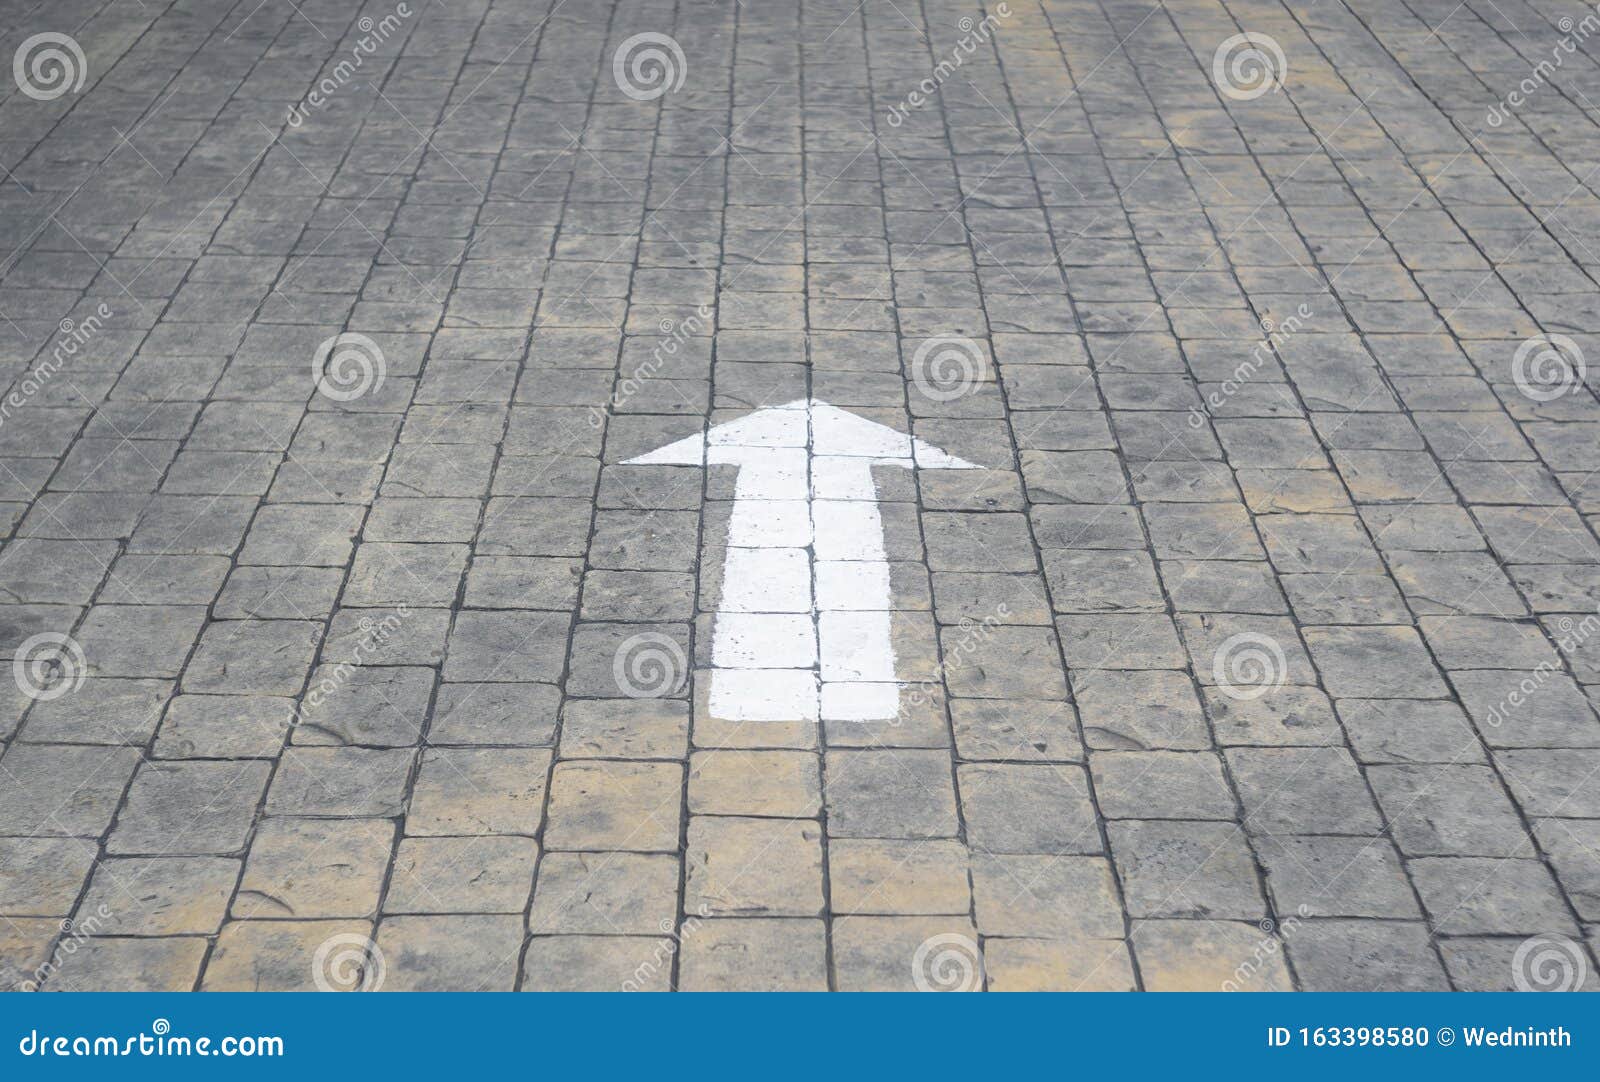 white arrow lines, concrete blocks paved surface, perpective view